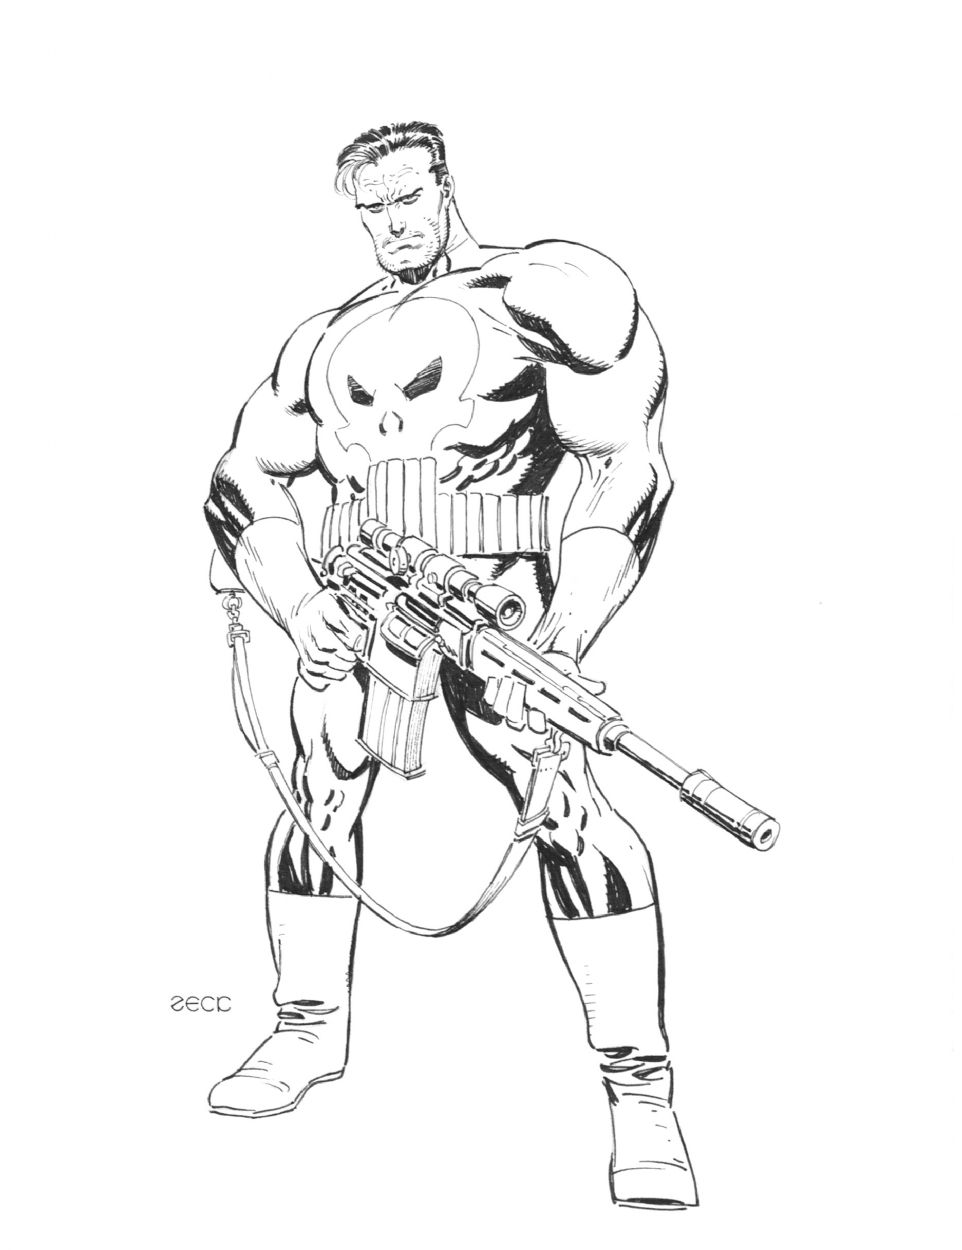 Punisher by Mike Zeck | Punisher comics, Comic art, Comic books art